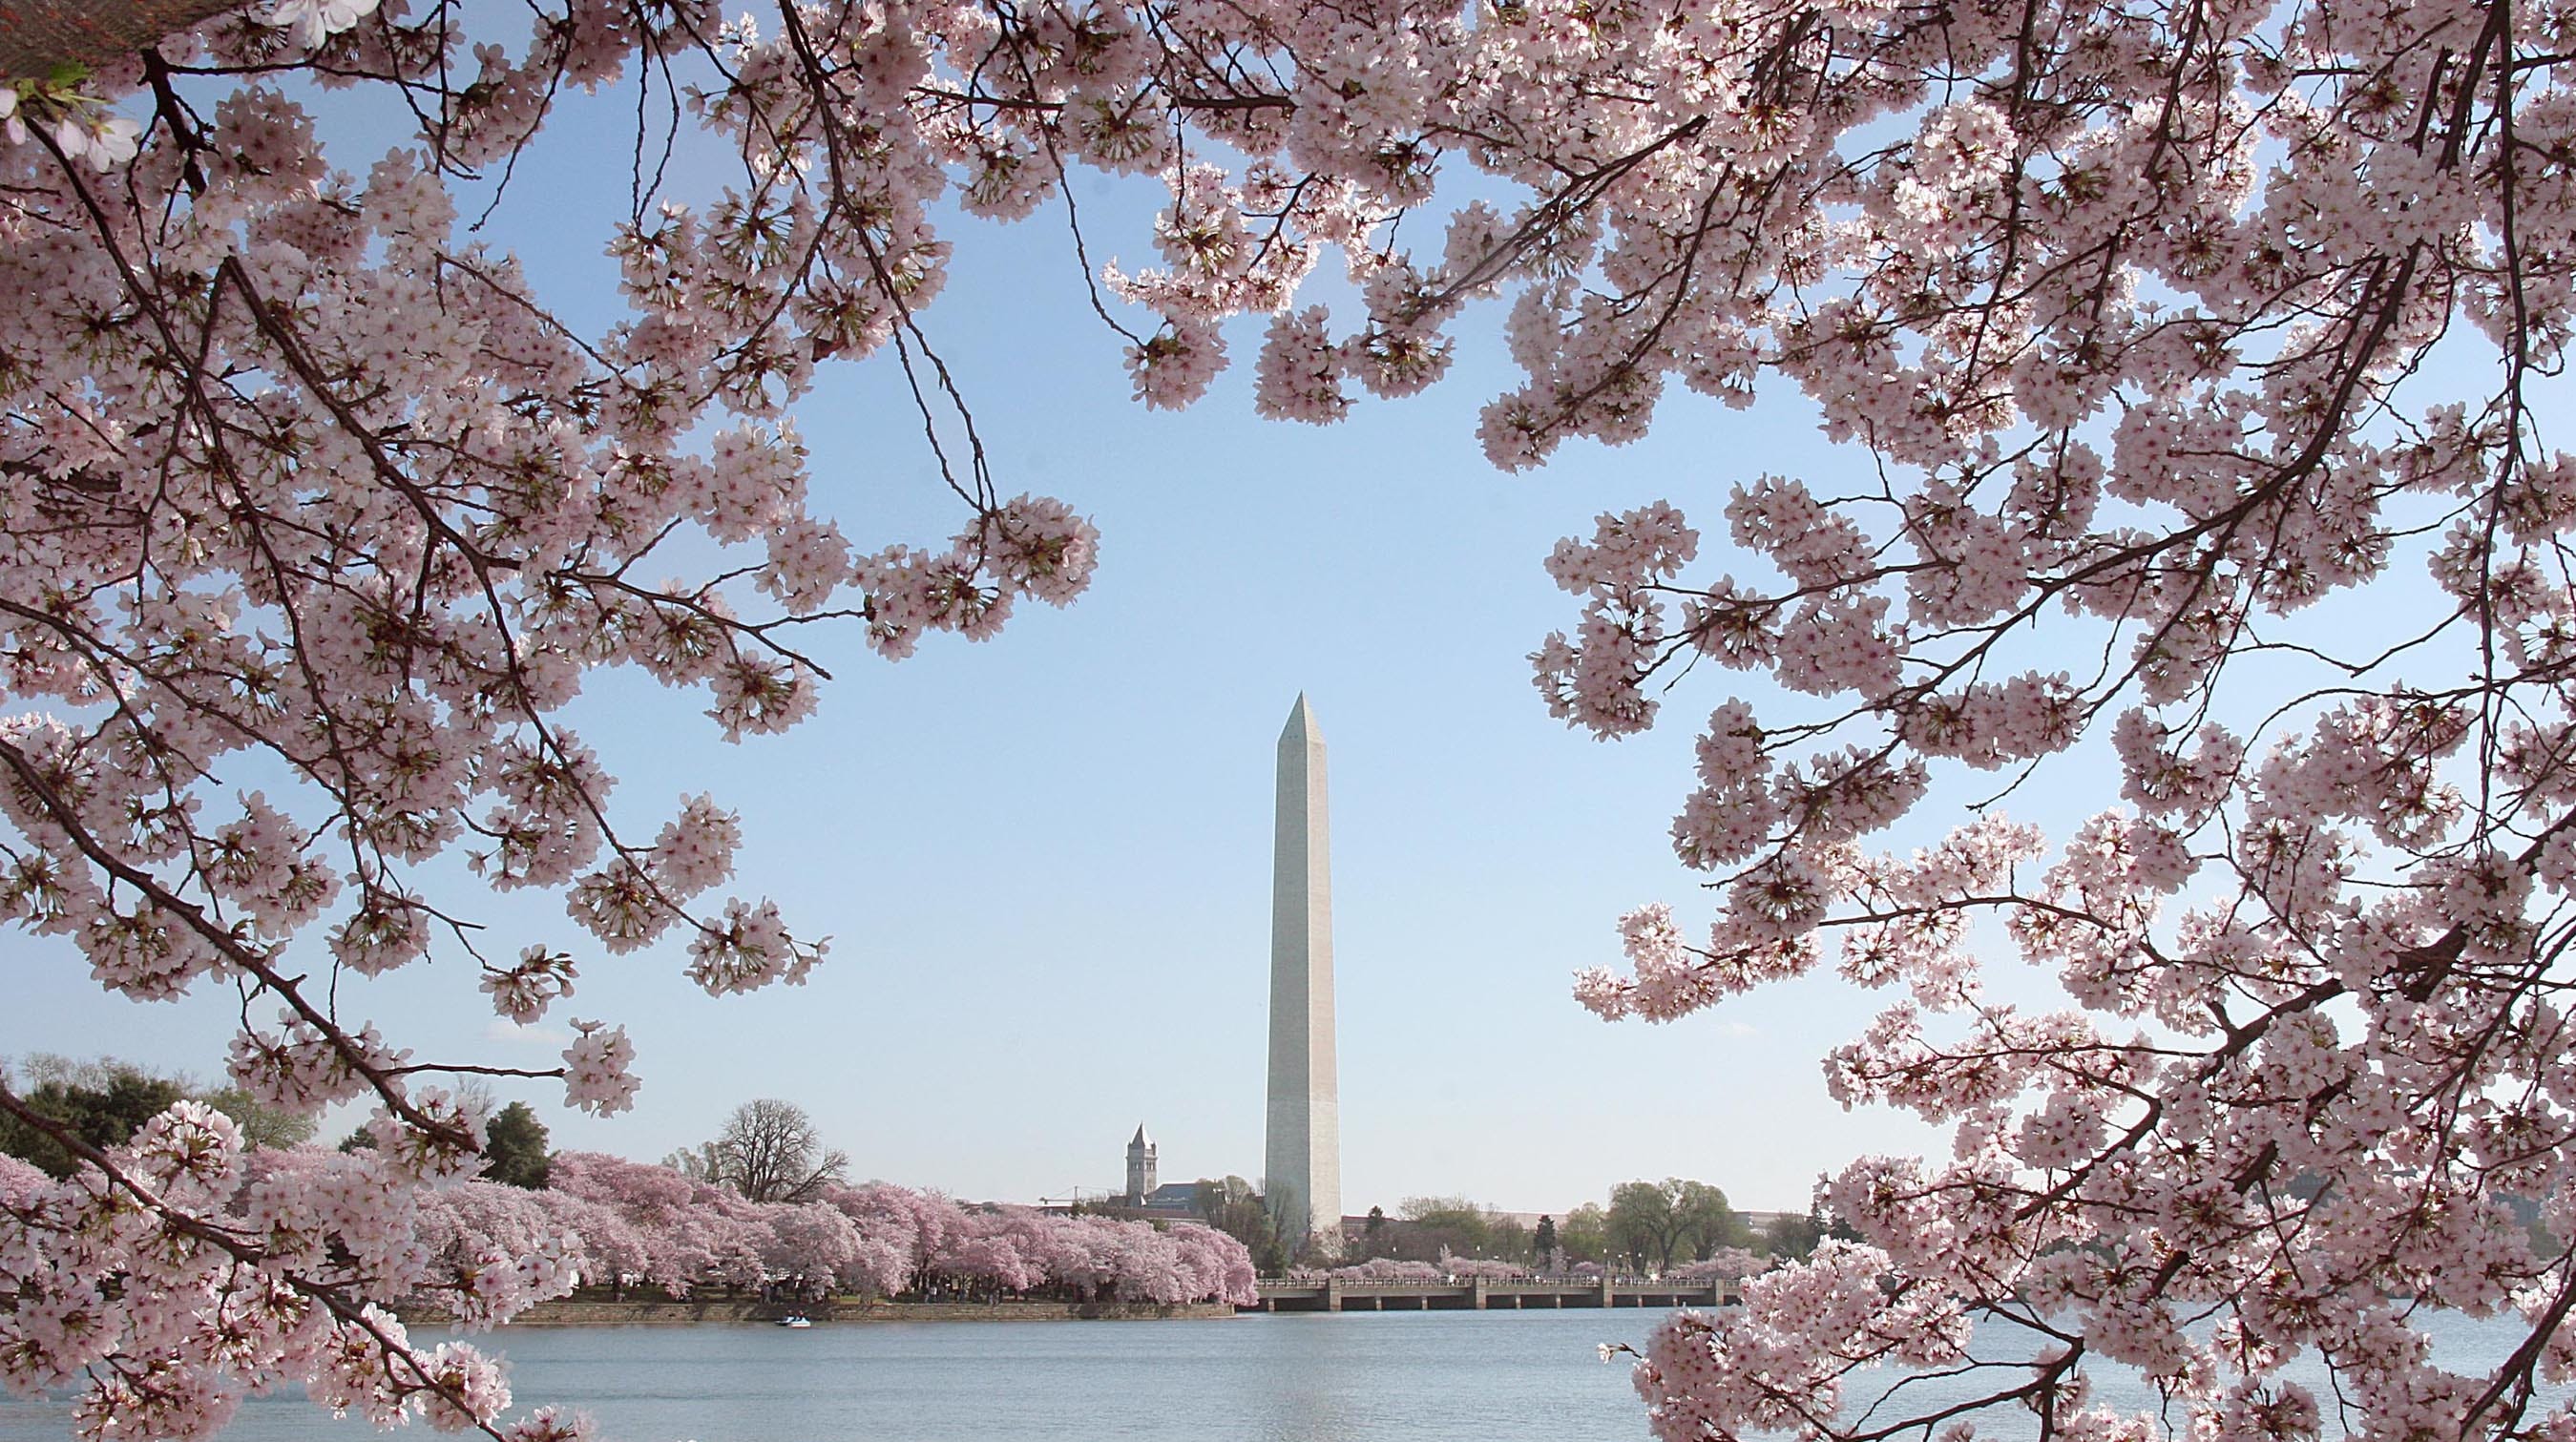 Washington, D.C., peak cherry blossom dates prediction April 36